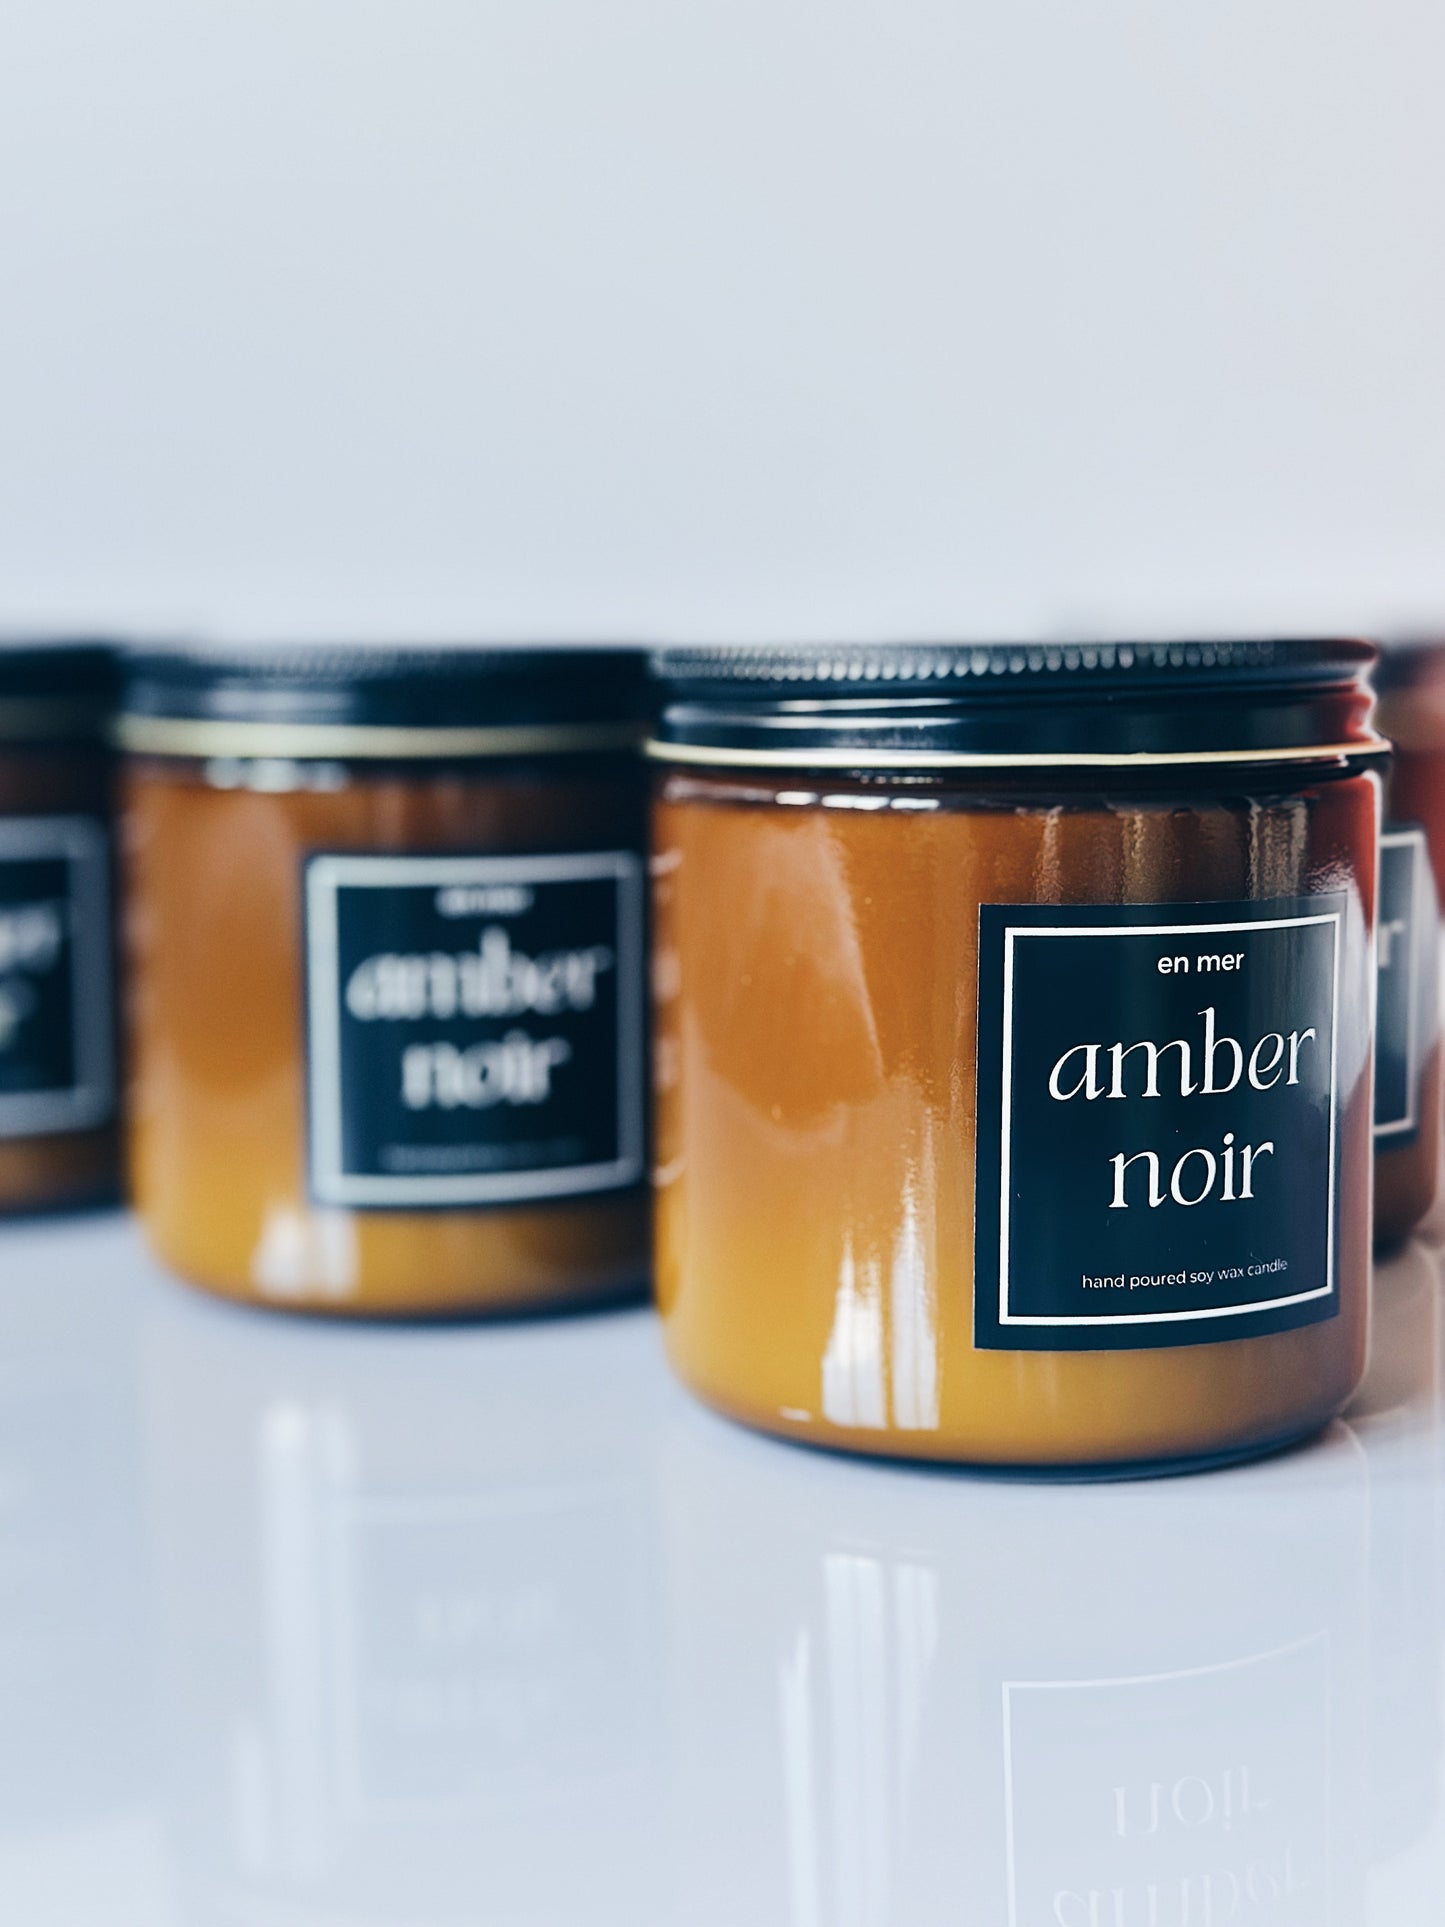 en mer LTD | amber noir | soy wax candle